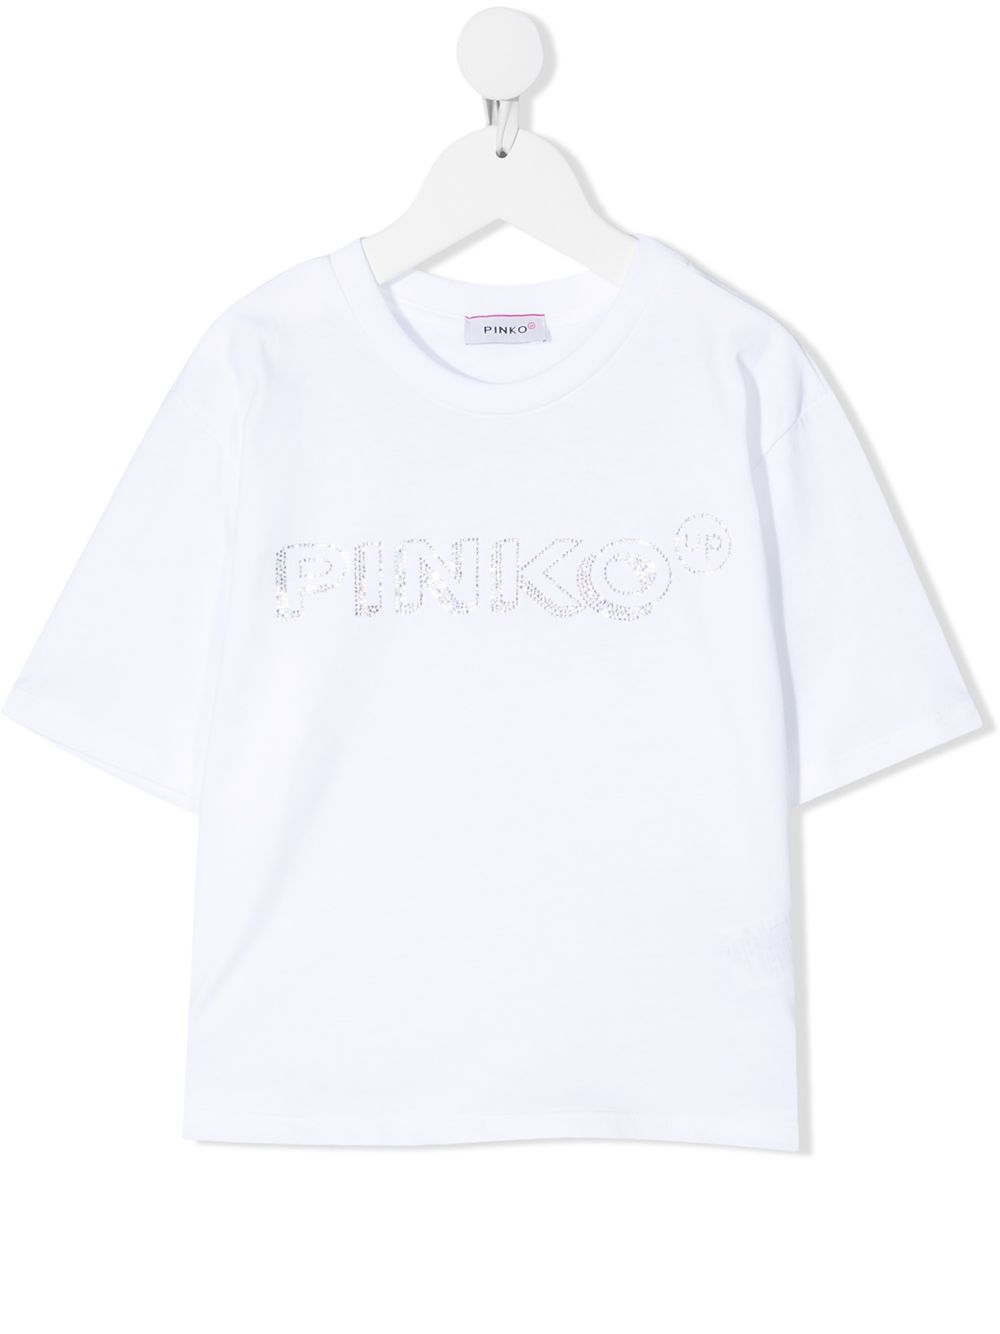 фото Pinko kids футболка с декорированным логотипом